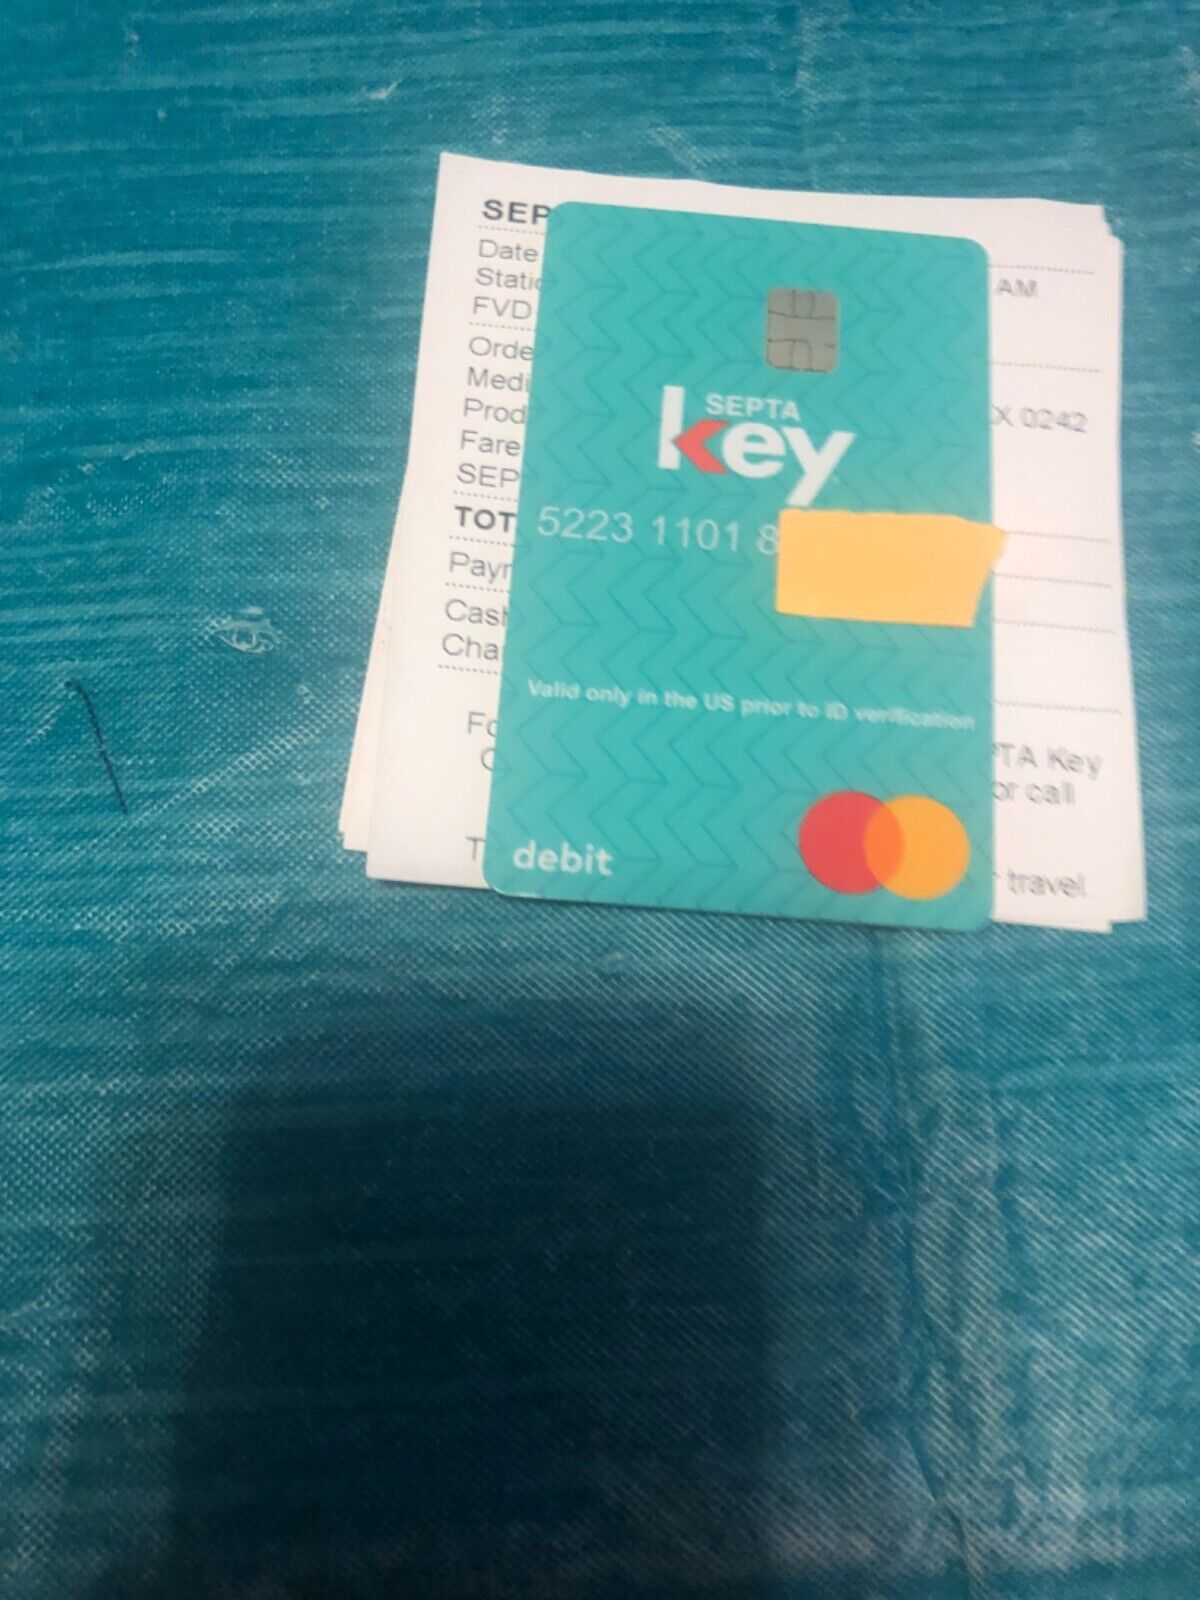 SEPTA key card